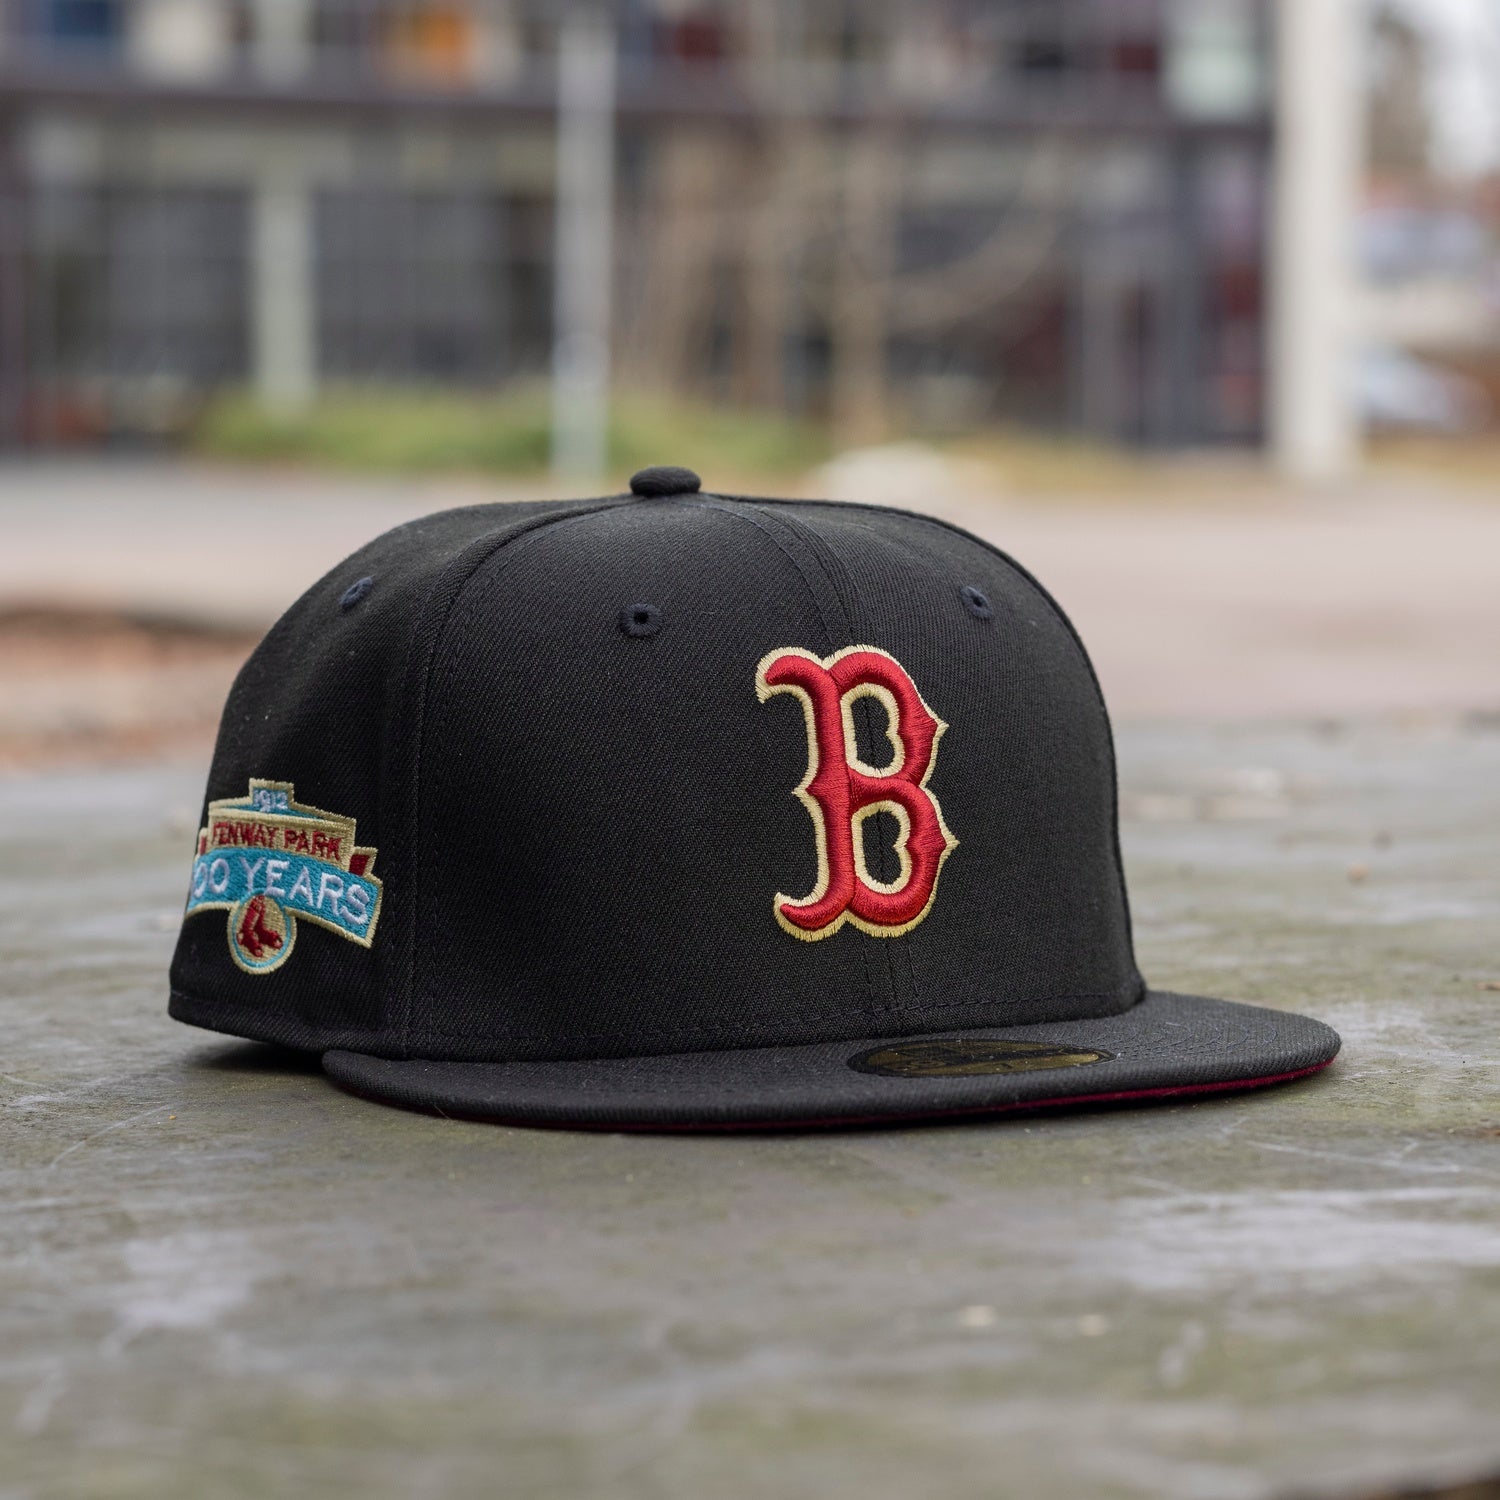 NEW ERA 59FIFTY MLB BOSTON RED SOX FENWAY PARK BLACK / MAROON UV FITTED CAP